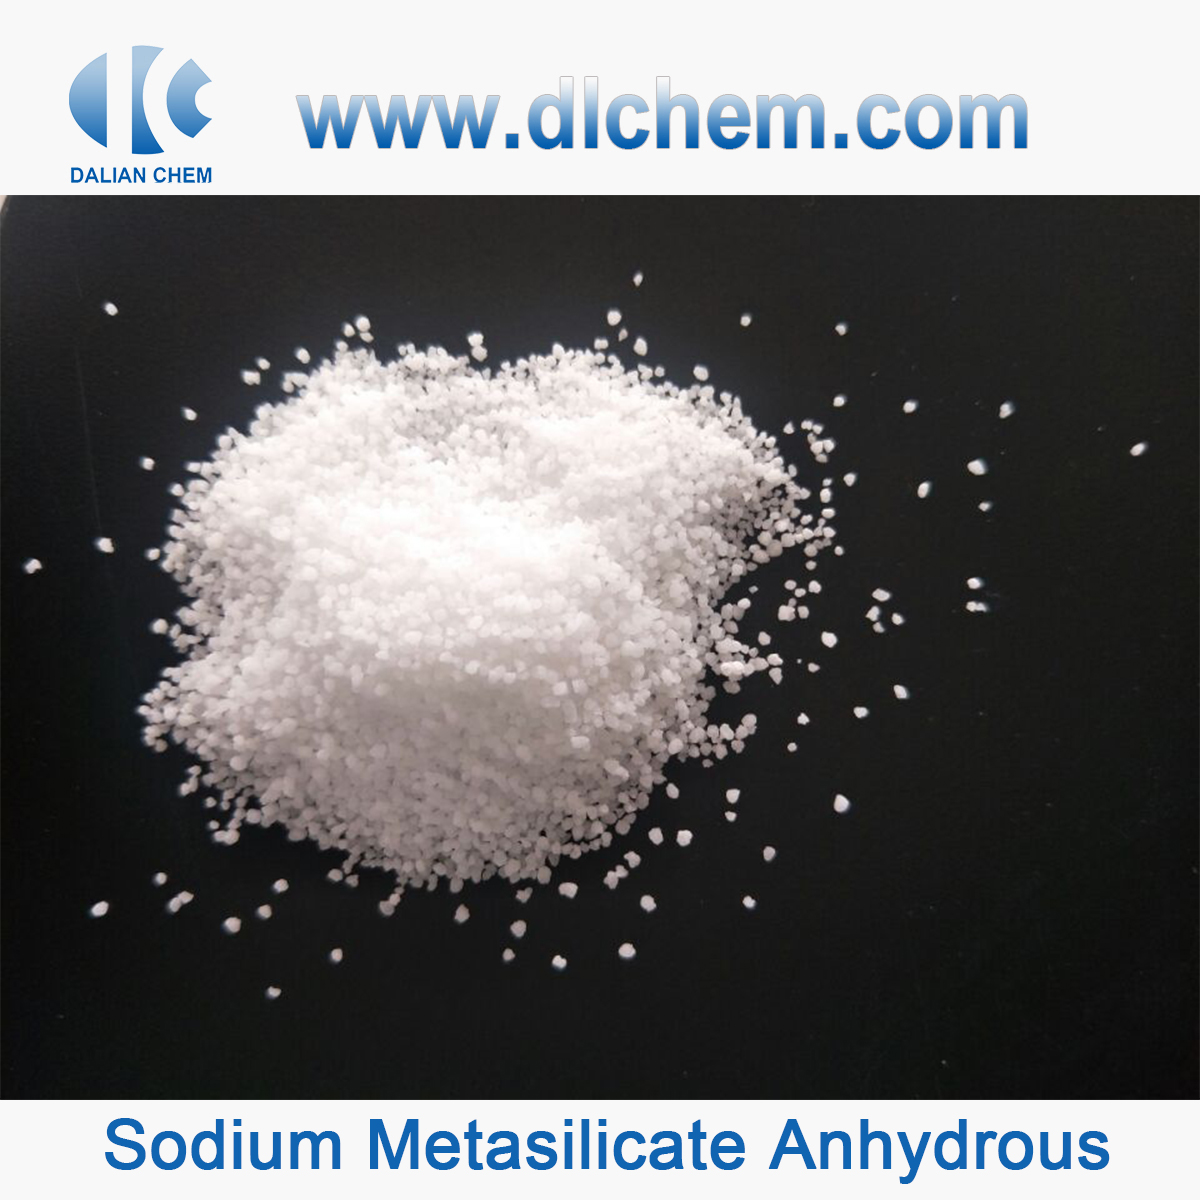 Sodium Metasilicate Anhydrous CAS No.6834-92-0